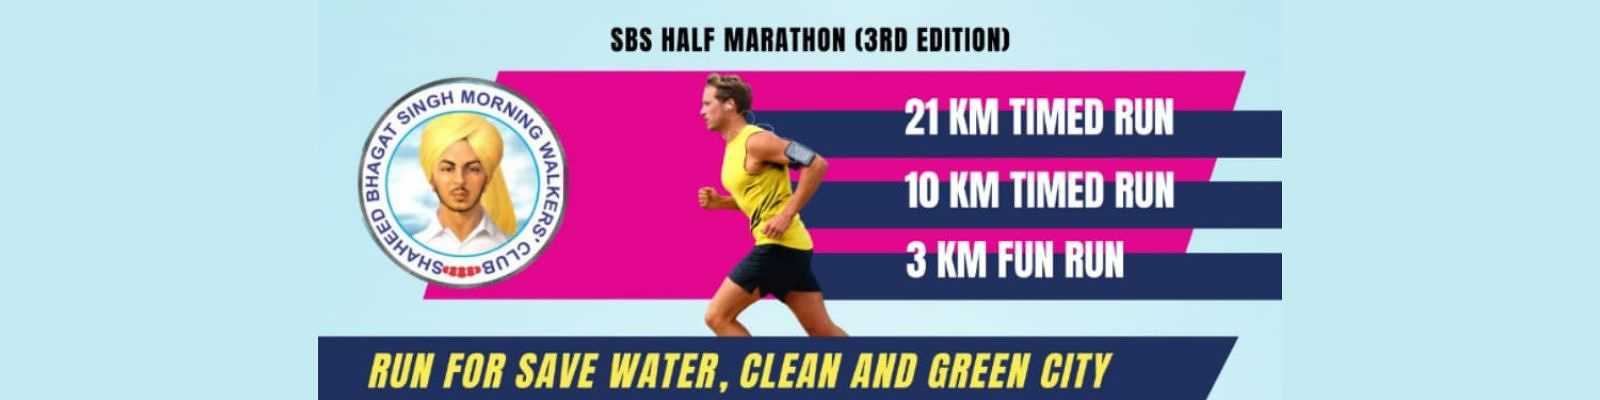 Sbs Half Marathon